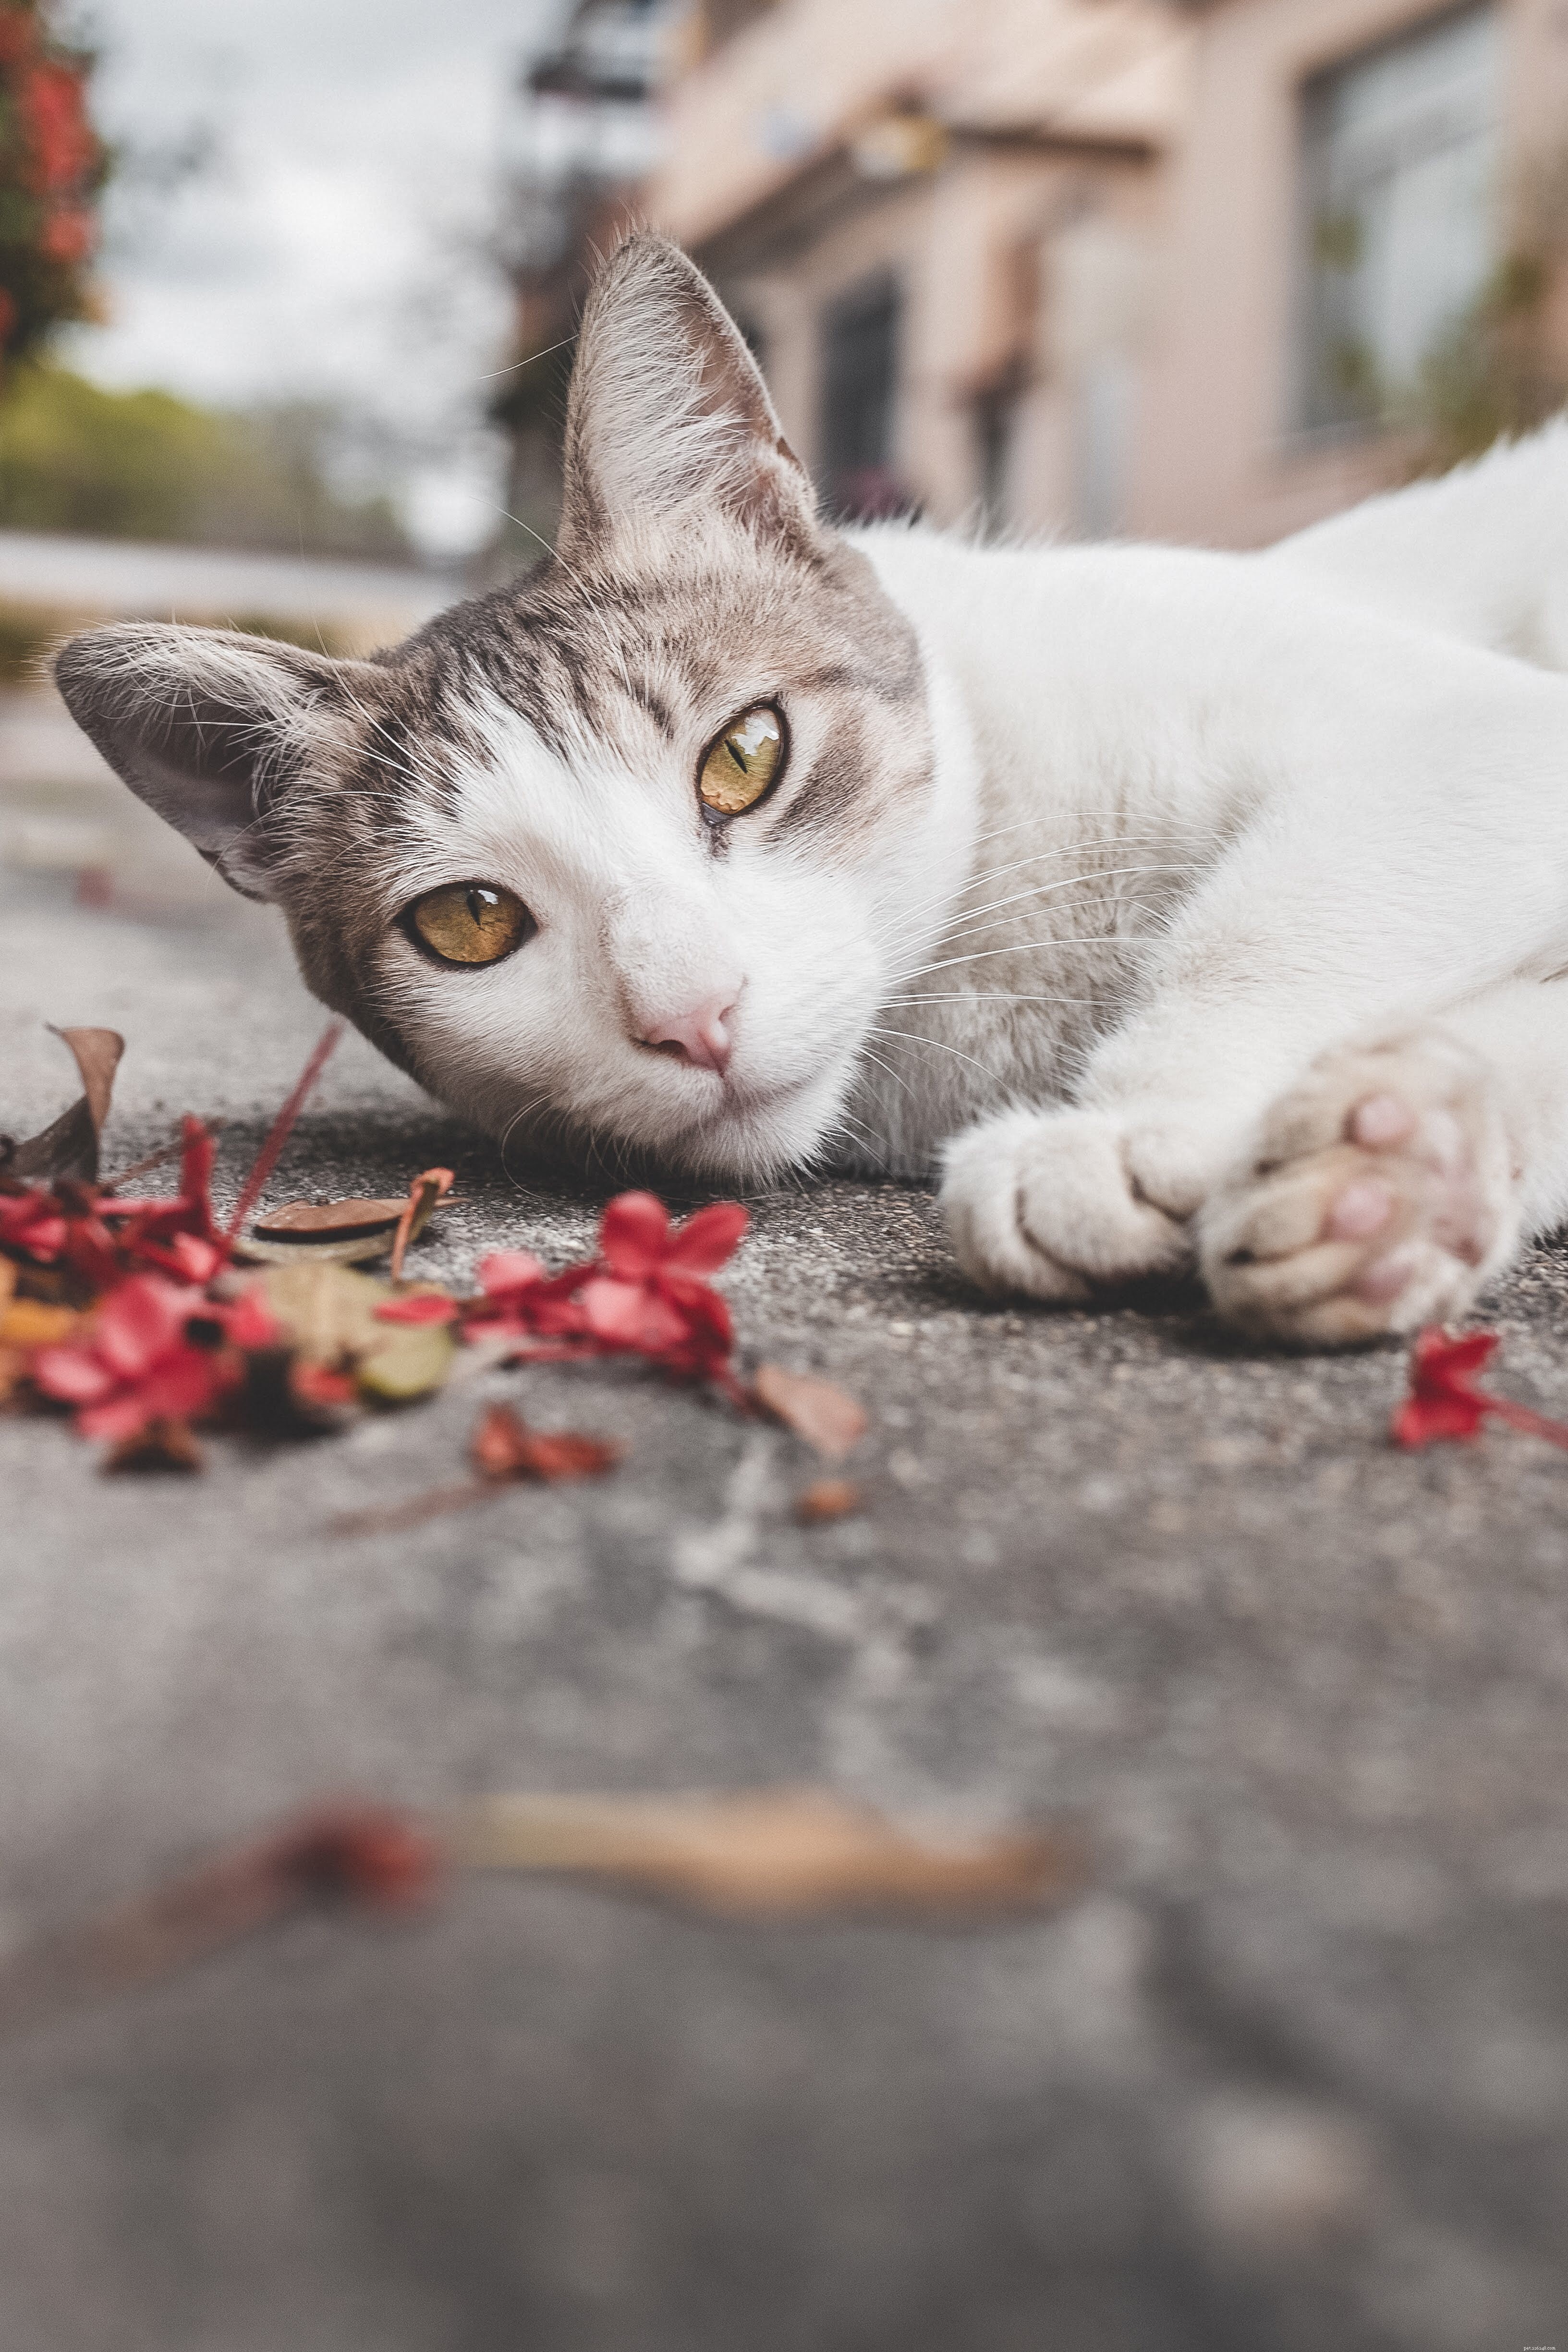 Felinoterapia – tratamento para gatos